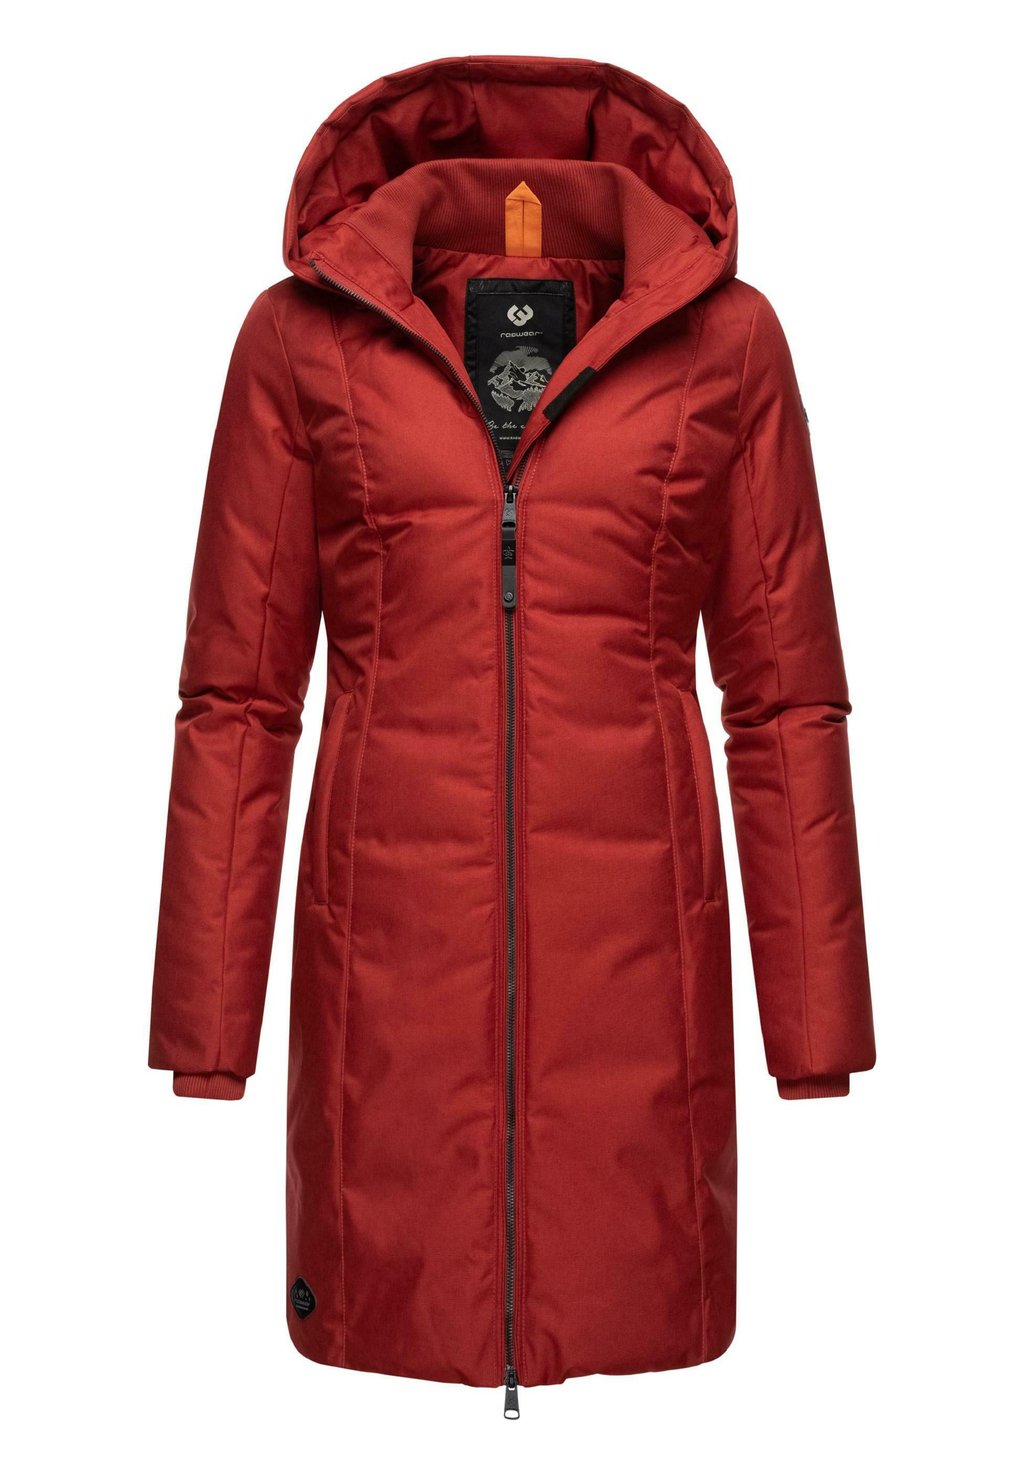 Зимнее пальто AMARRI Ragwear, красный